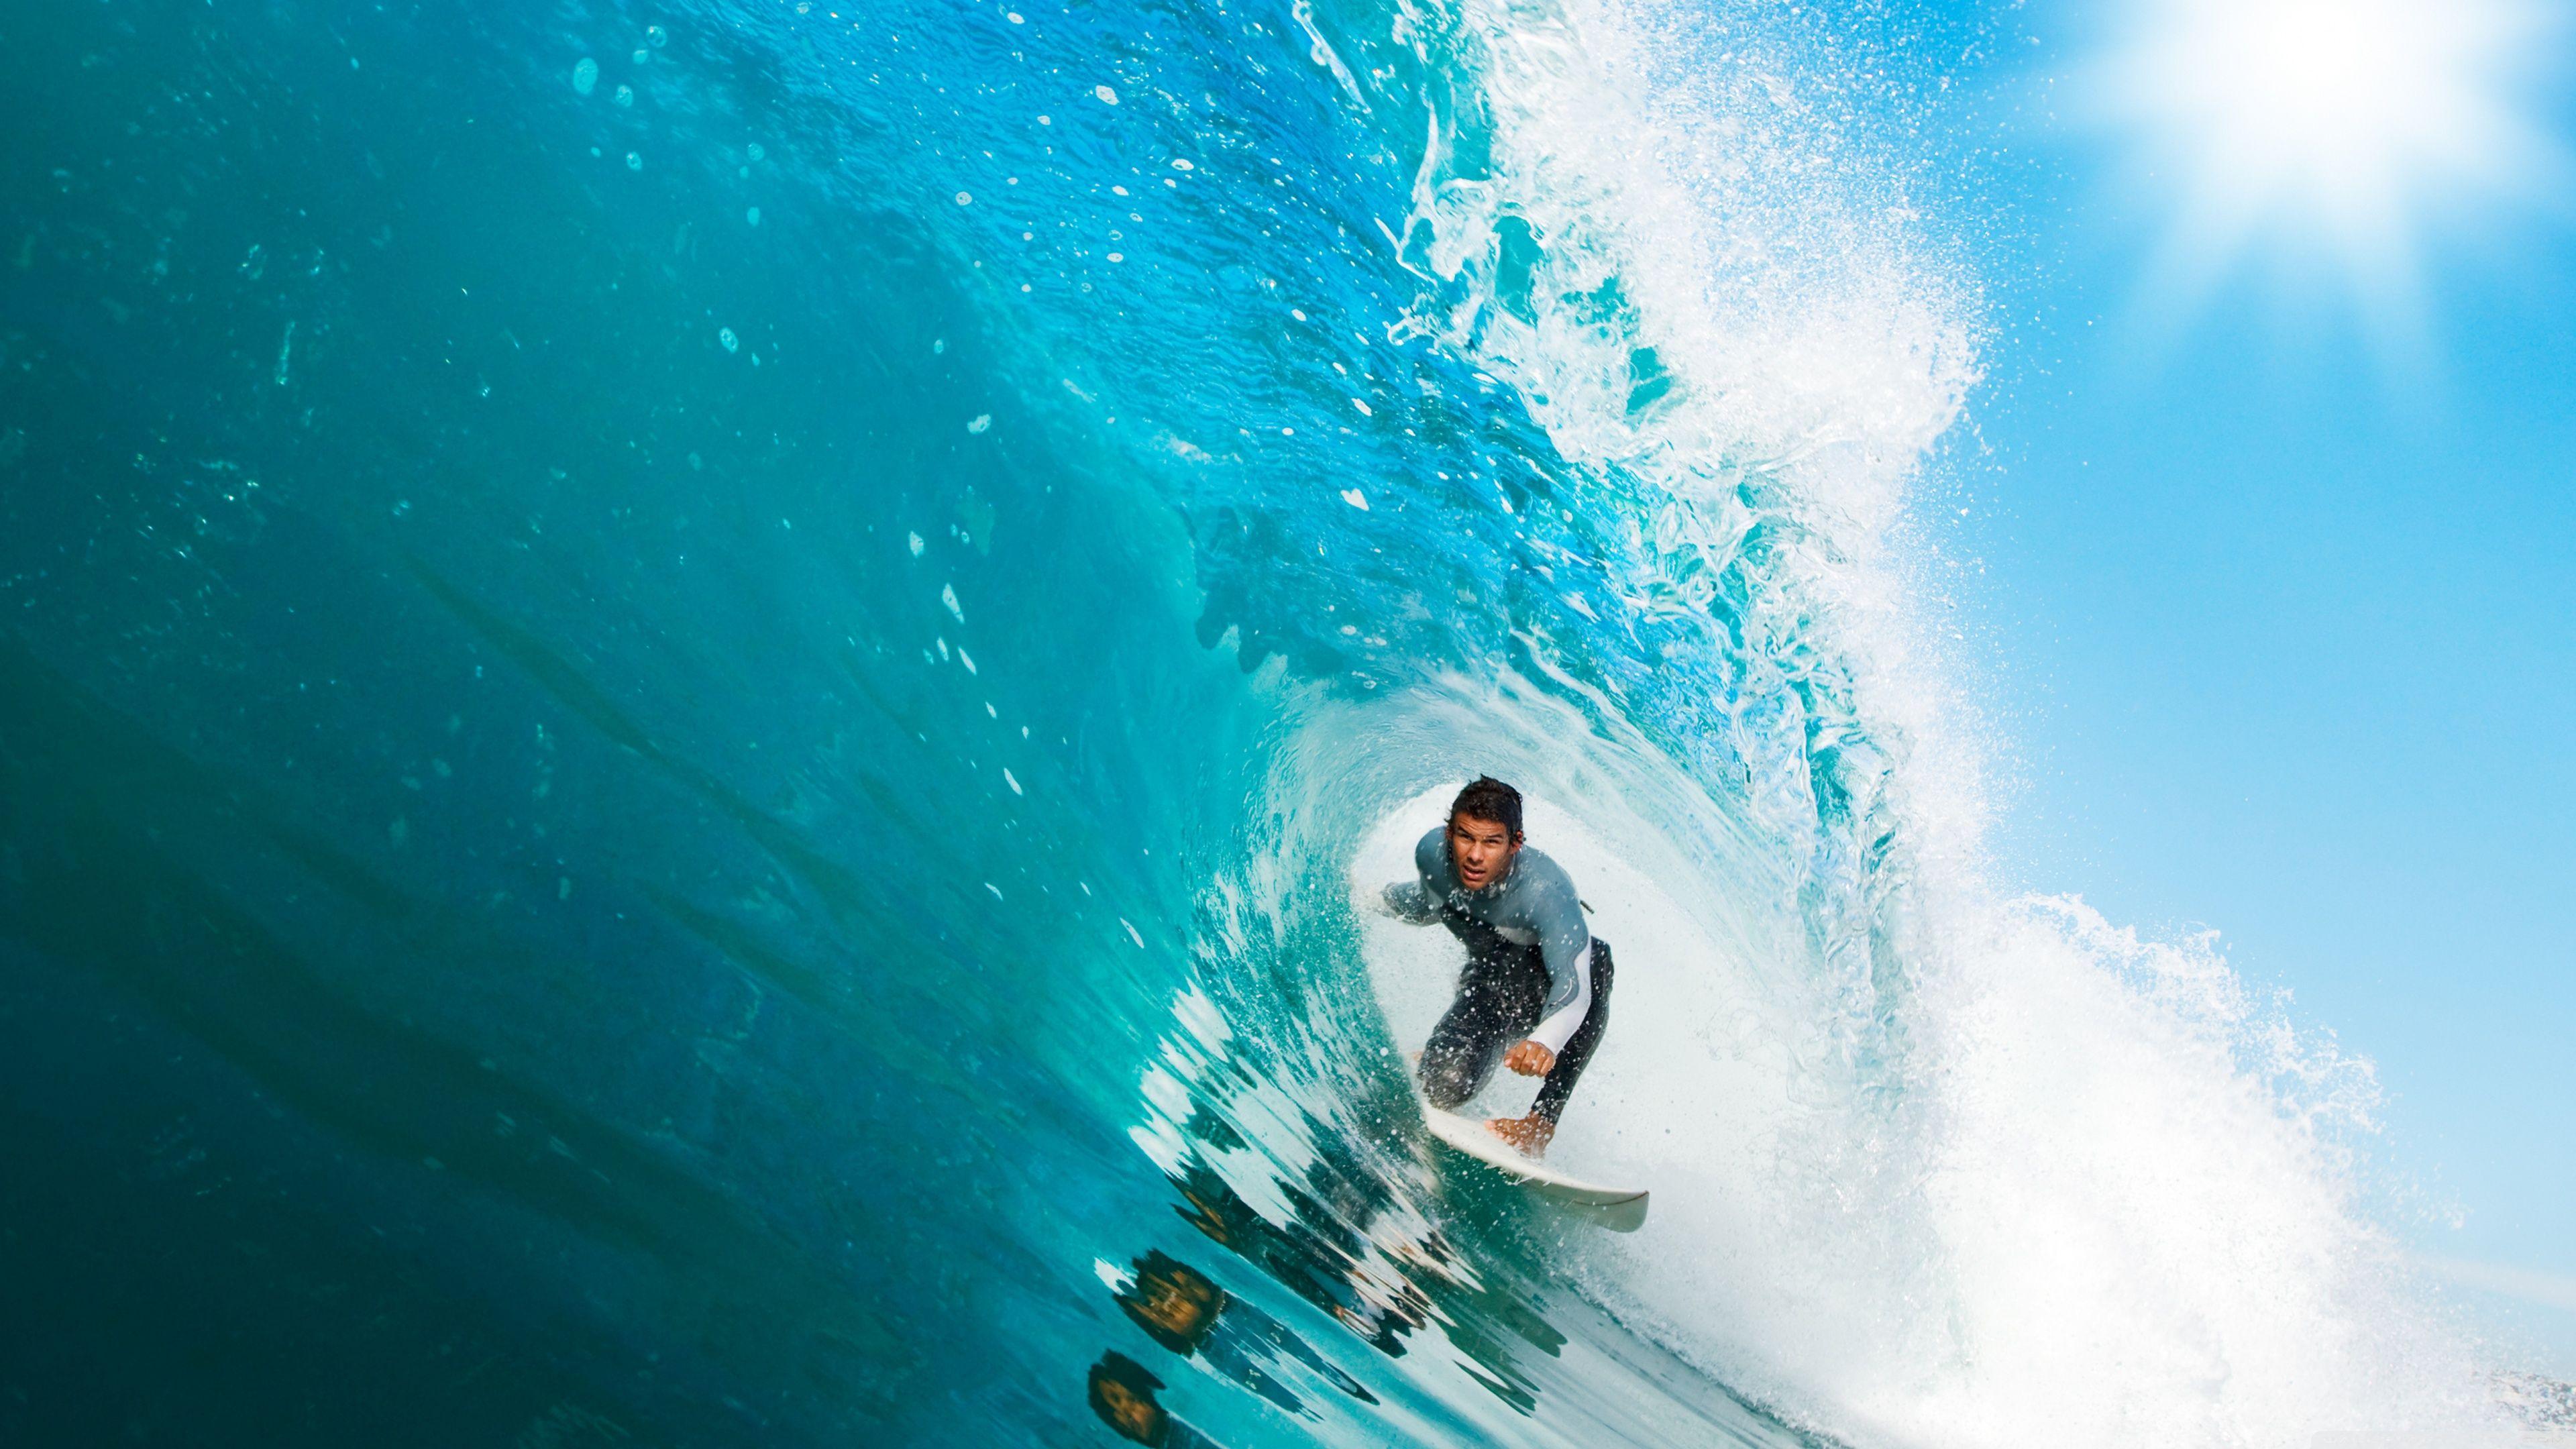 4k Ultra Hd Surf Wallpapers Top Free 4k Ultra Hd Surf Backgrounds Wallpaperaccess